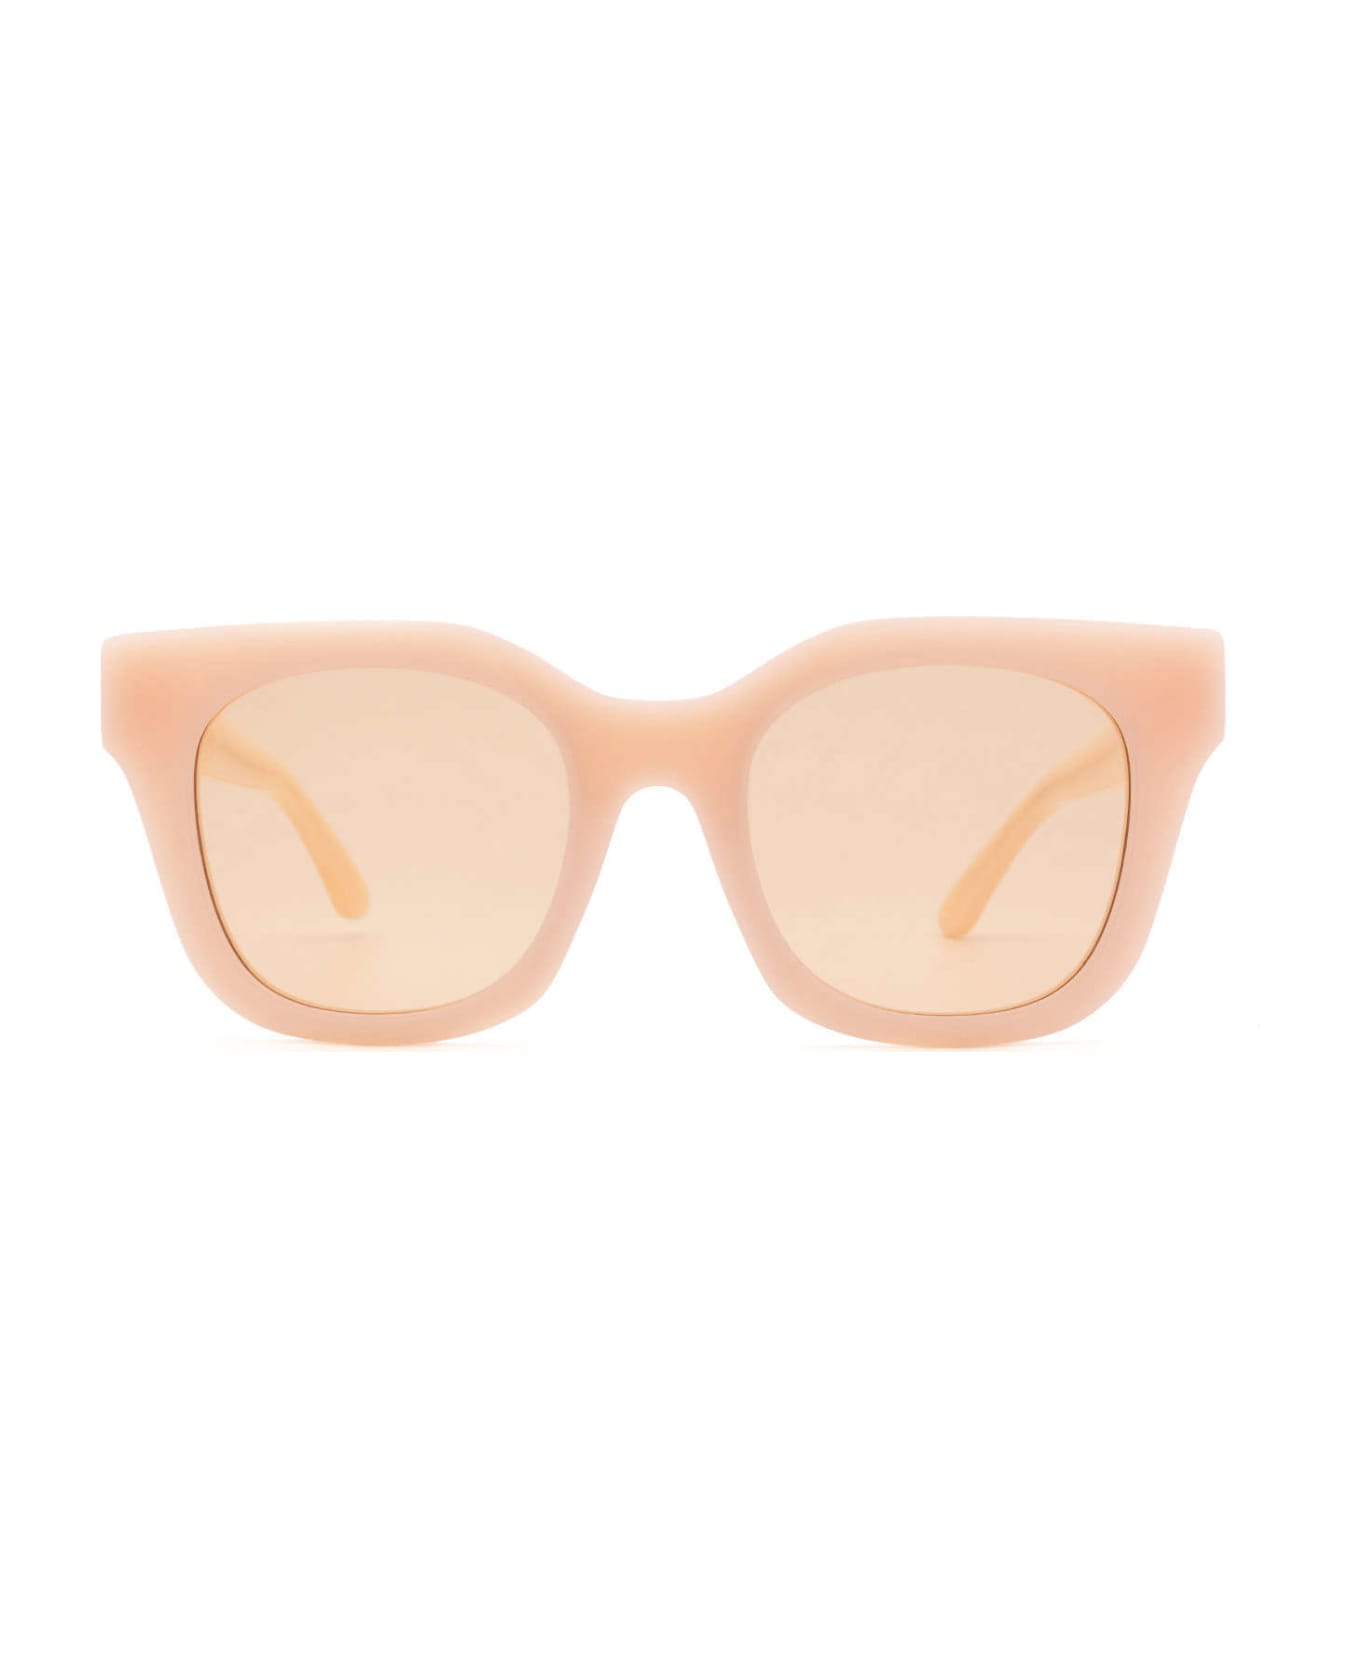 Huma Blue Pink Sunglasses - Pink